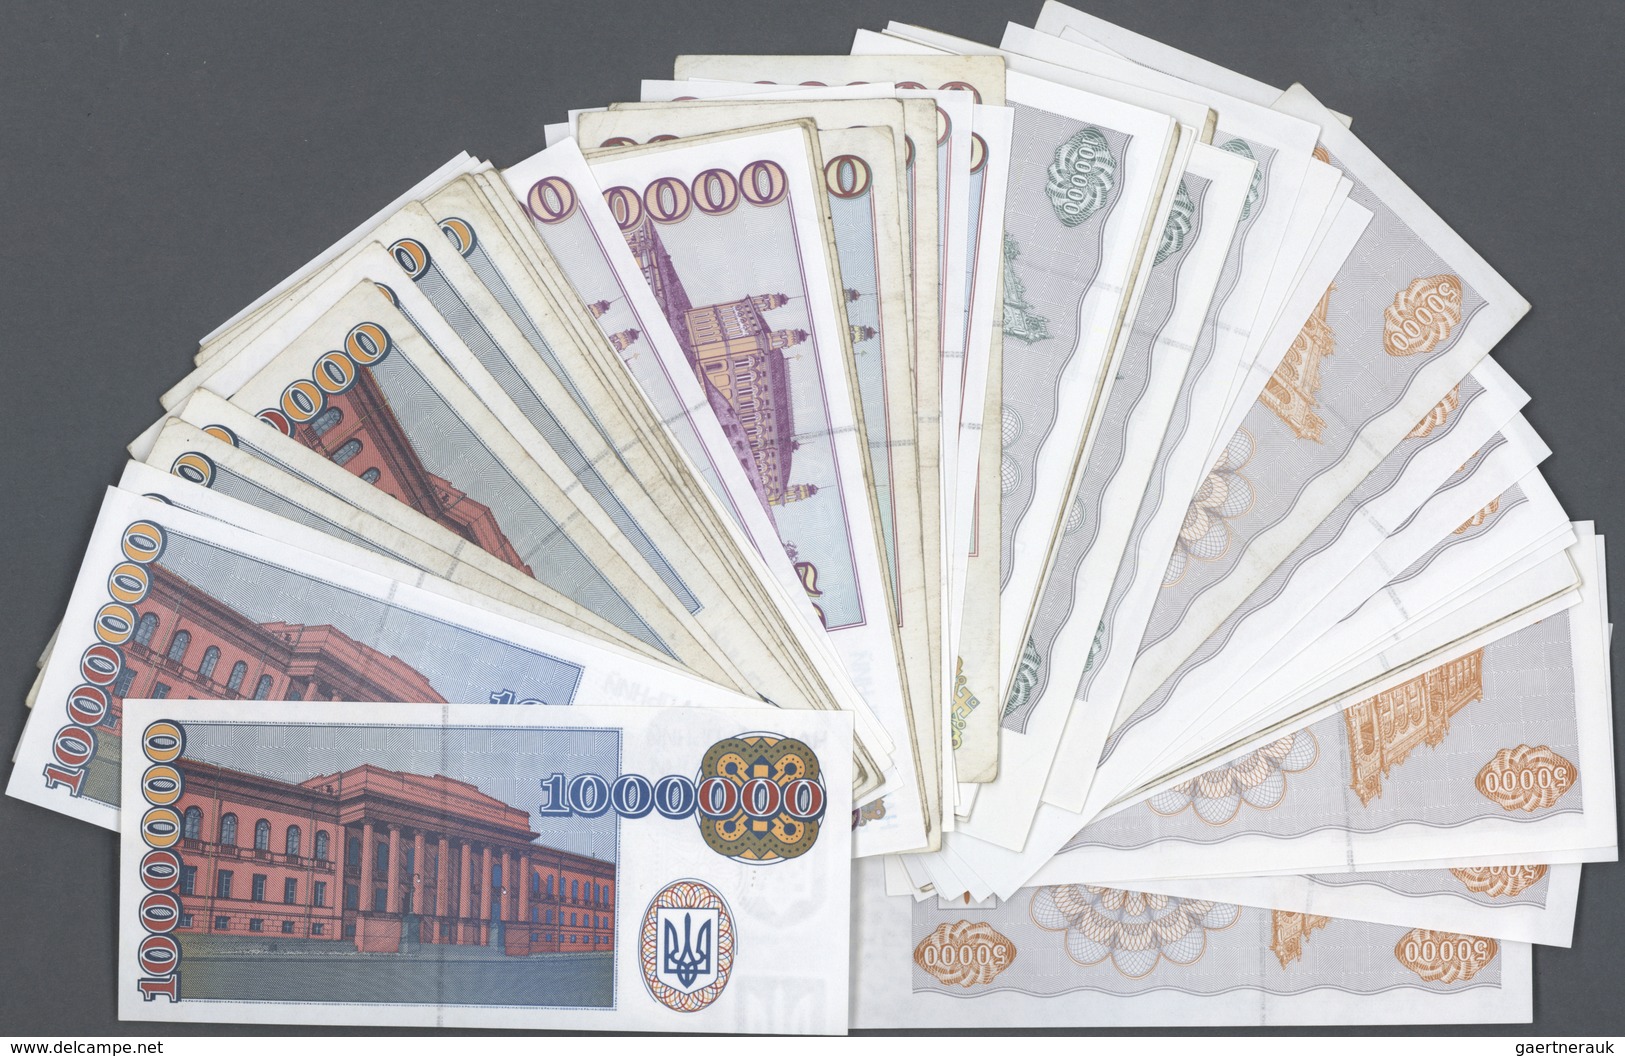 Ukraina / Ukraine: Huge Set With 337 Banknotes Of The Ukrainian National Bank Issues 1991 - 1995, Co - Ukraine